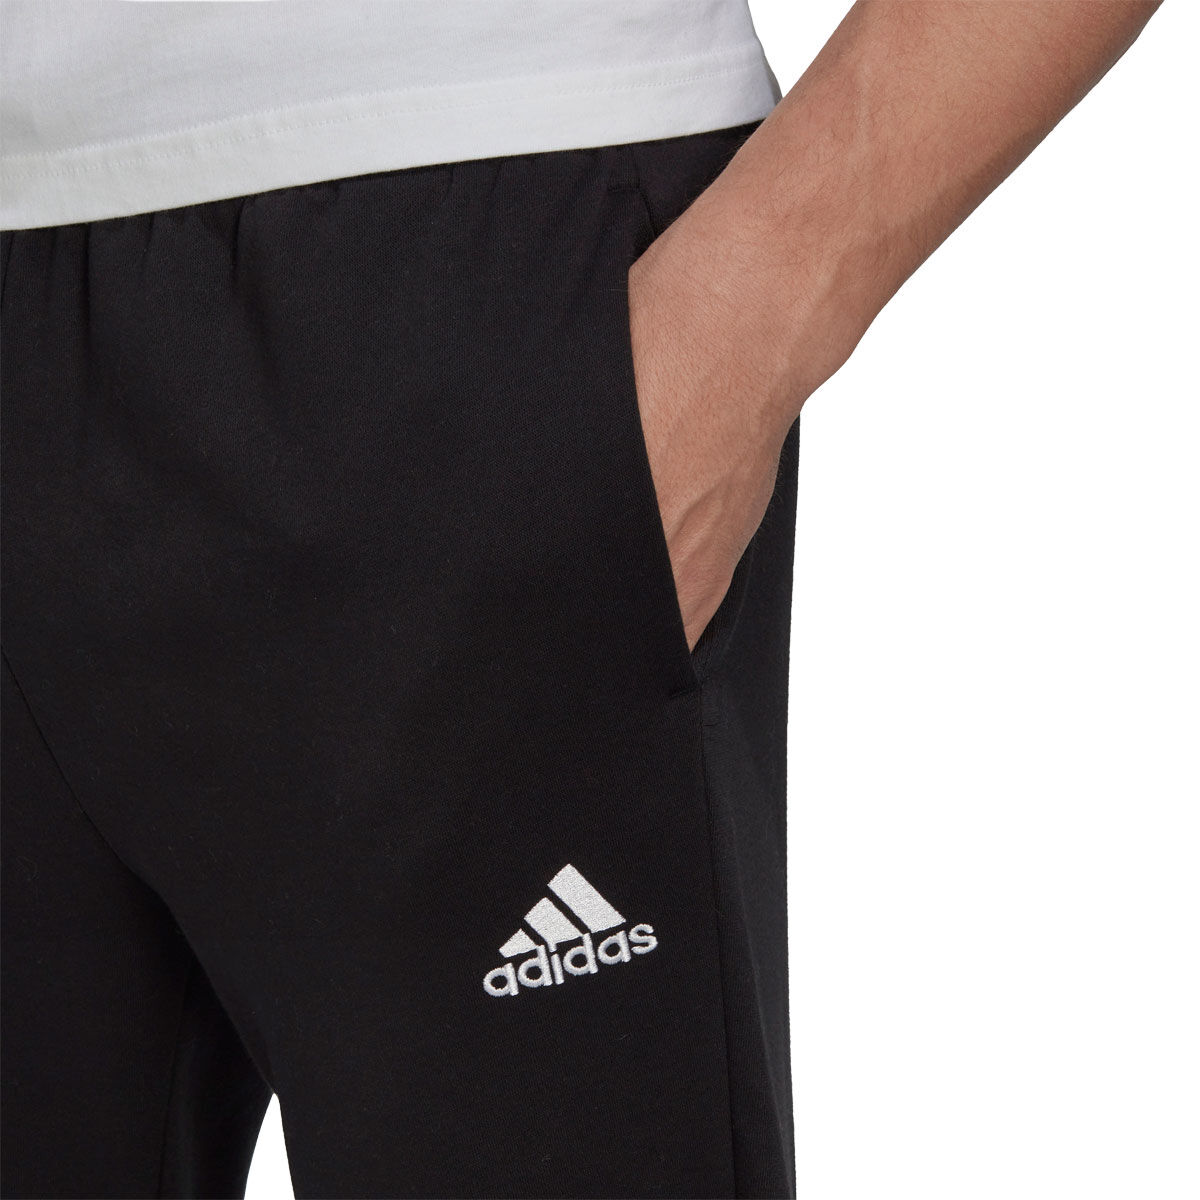 Adidas Pants Mens Large Black Three Stripe Tapered Zip Track